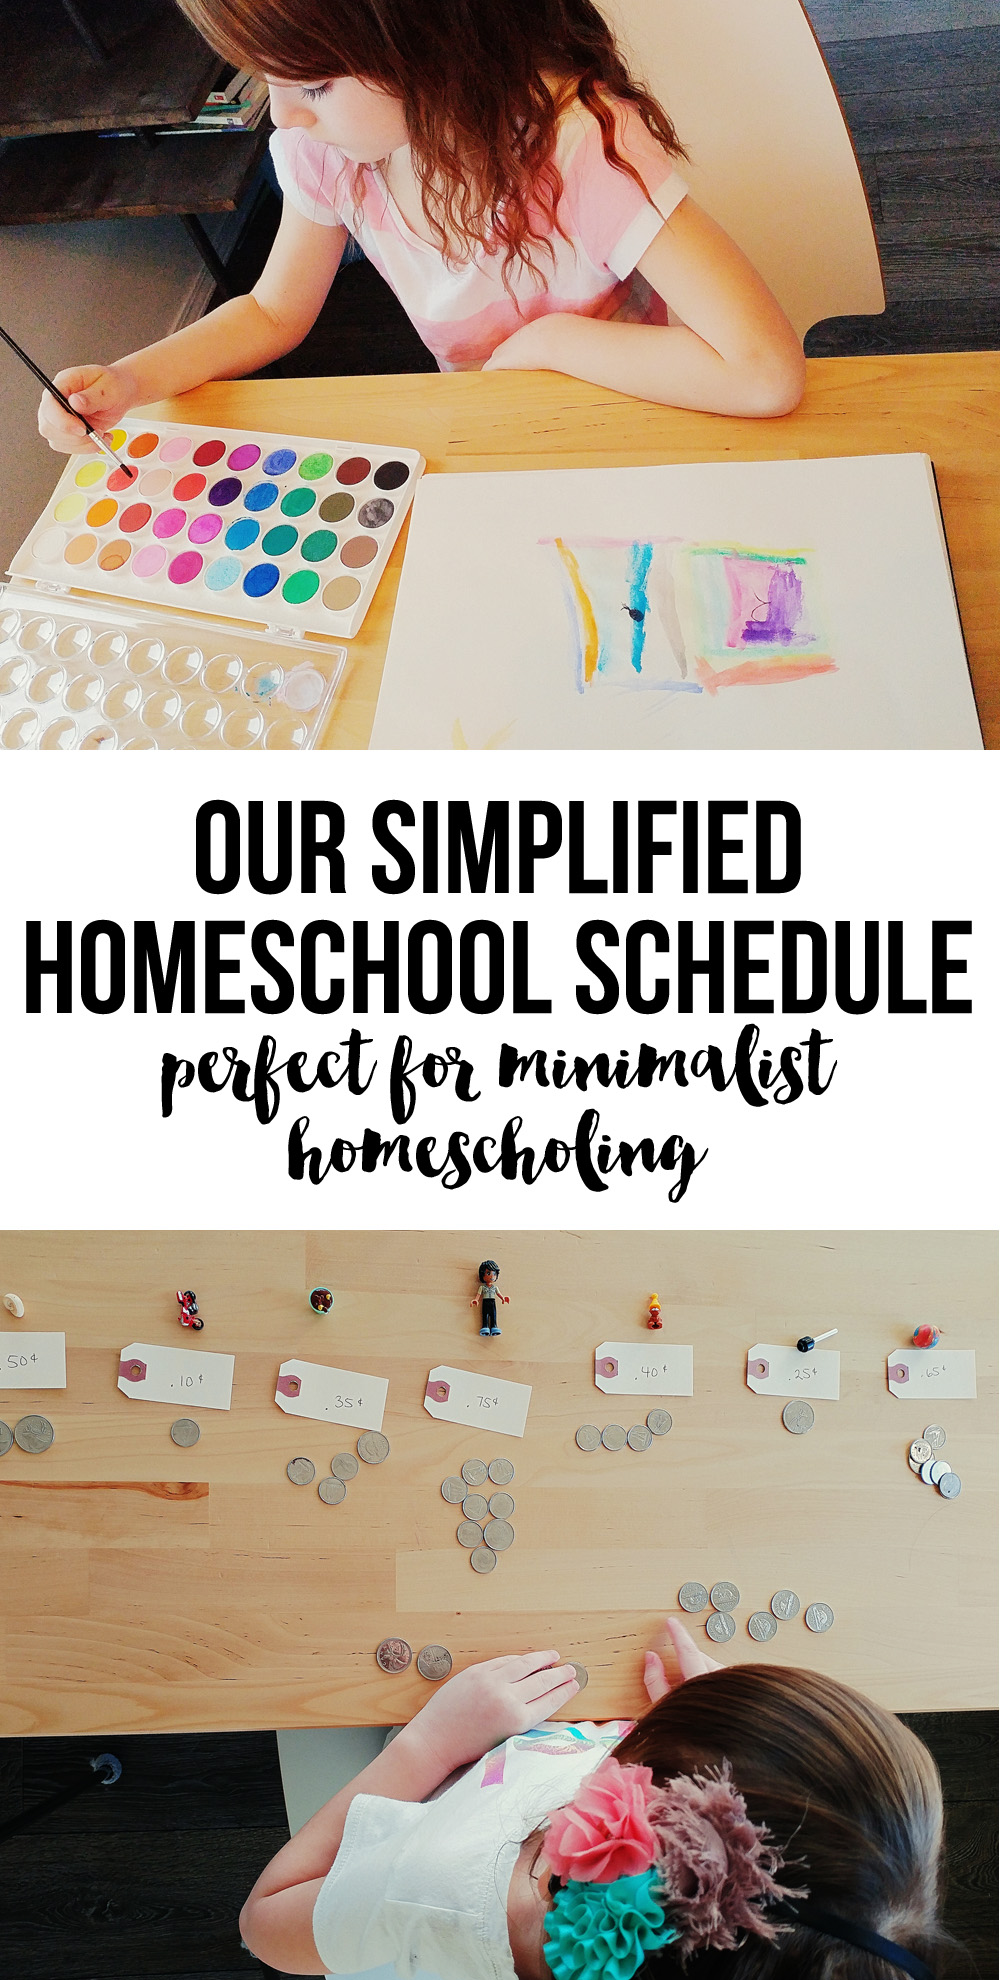 Our Simplified Weekly Homeschool Schedule - minimalist homeschooling